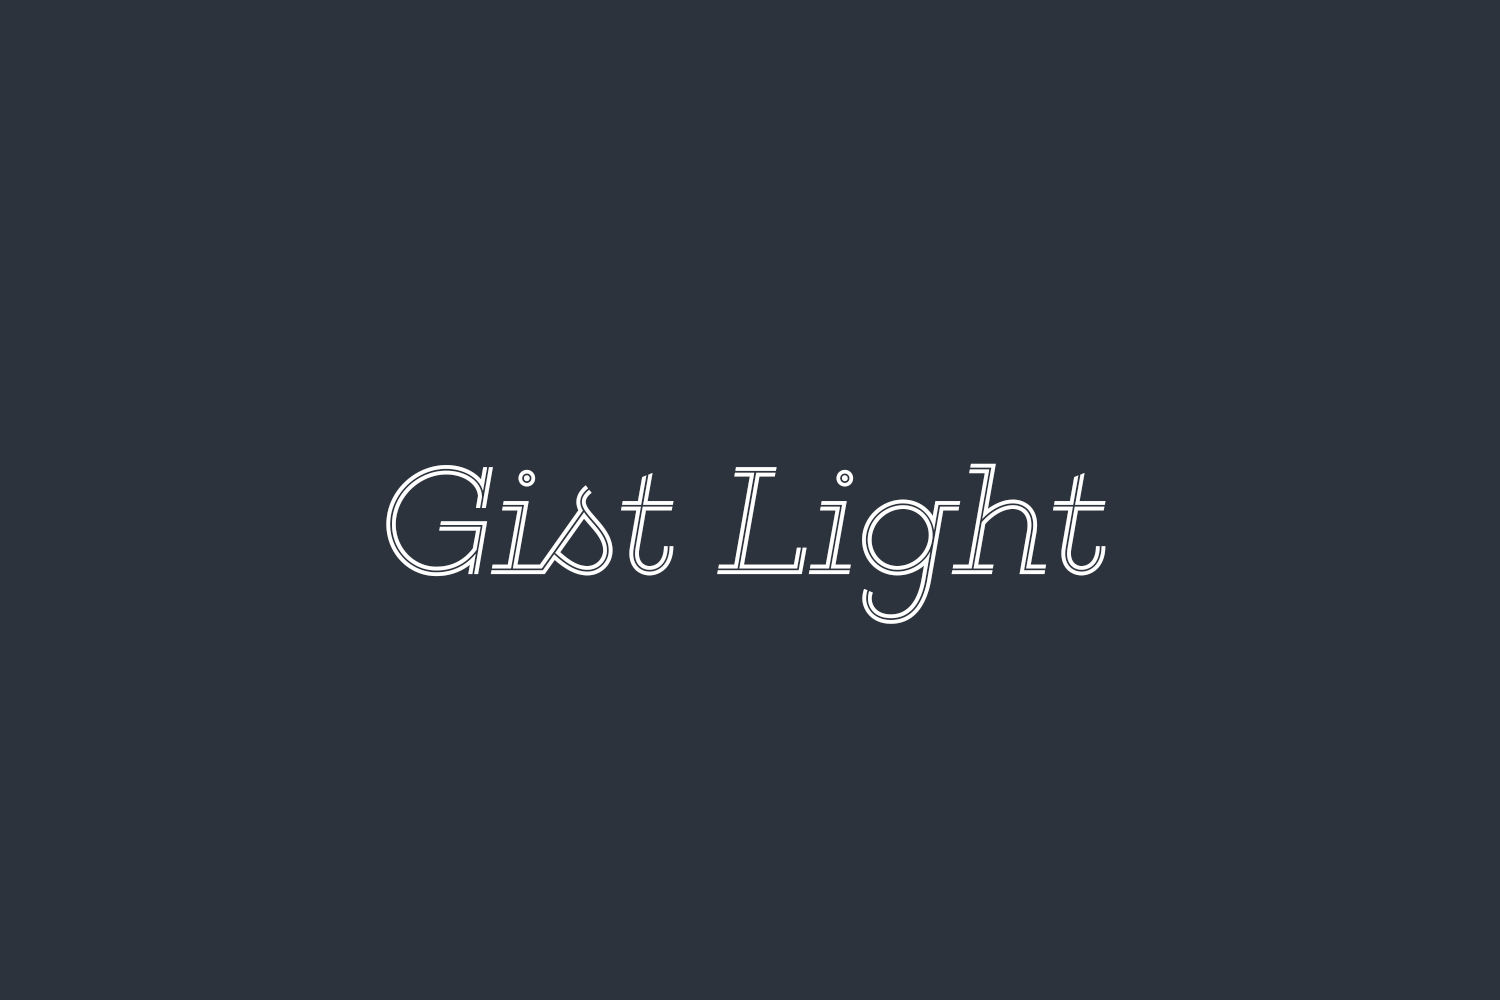 Gist Light